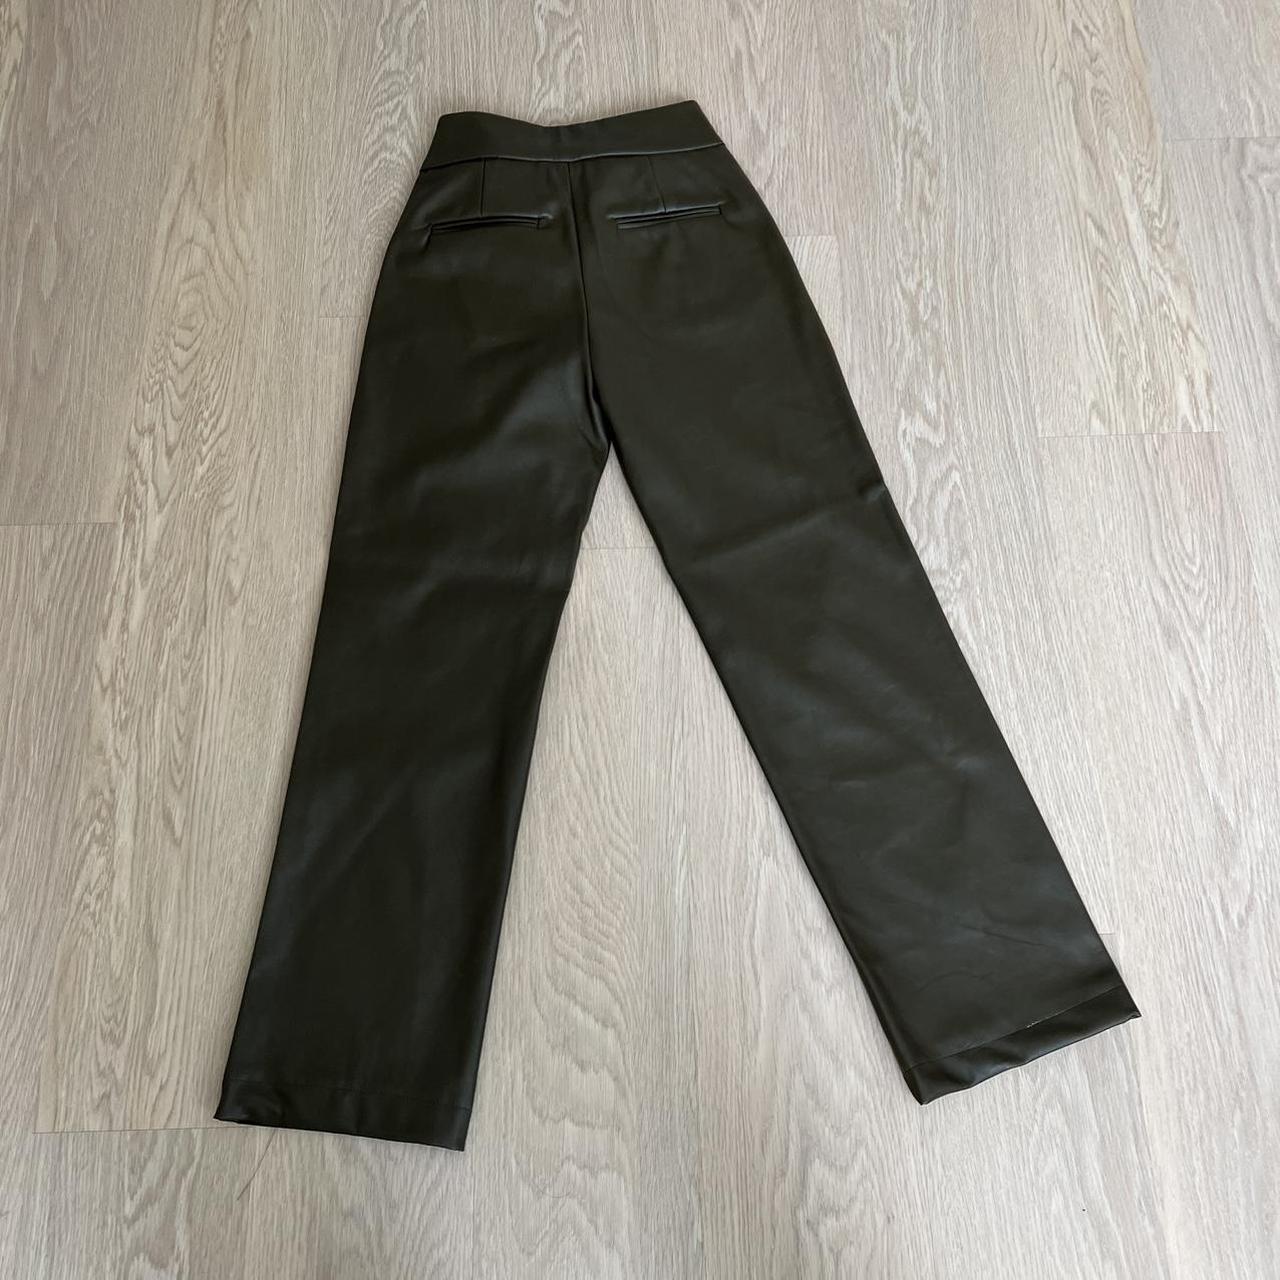 Khaki Vegan Leather Pants from SUNDARBAY these were... - Depop